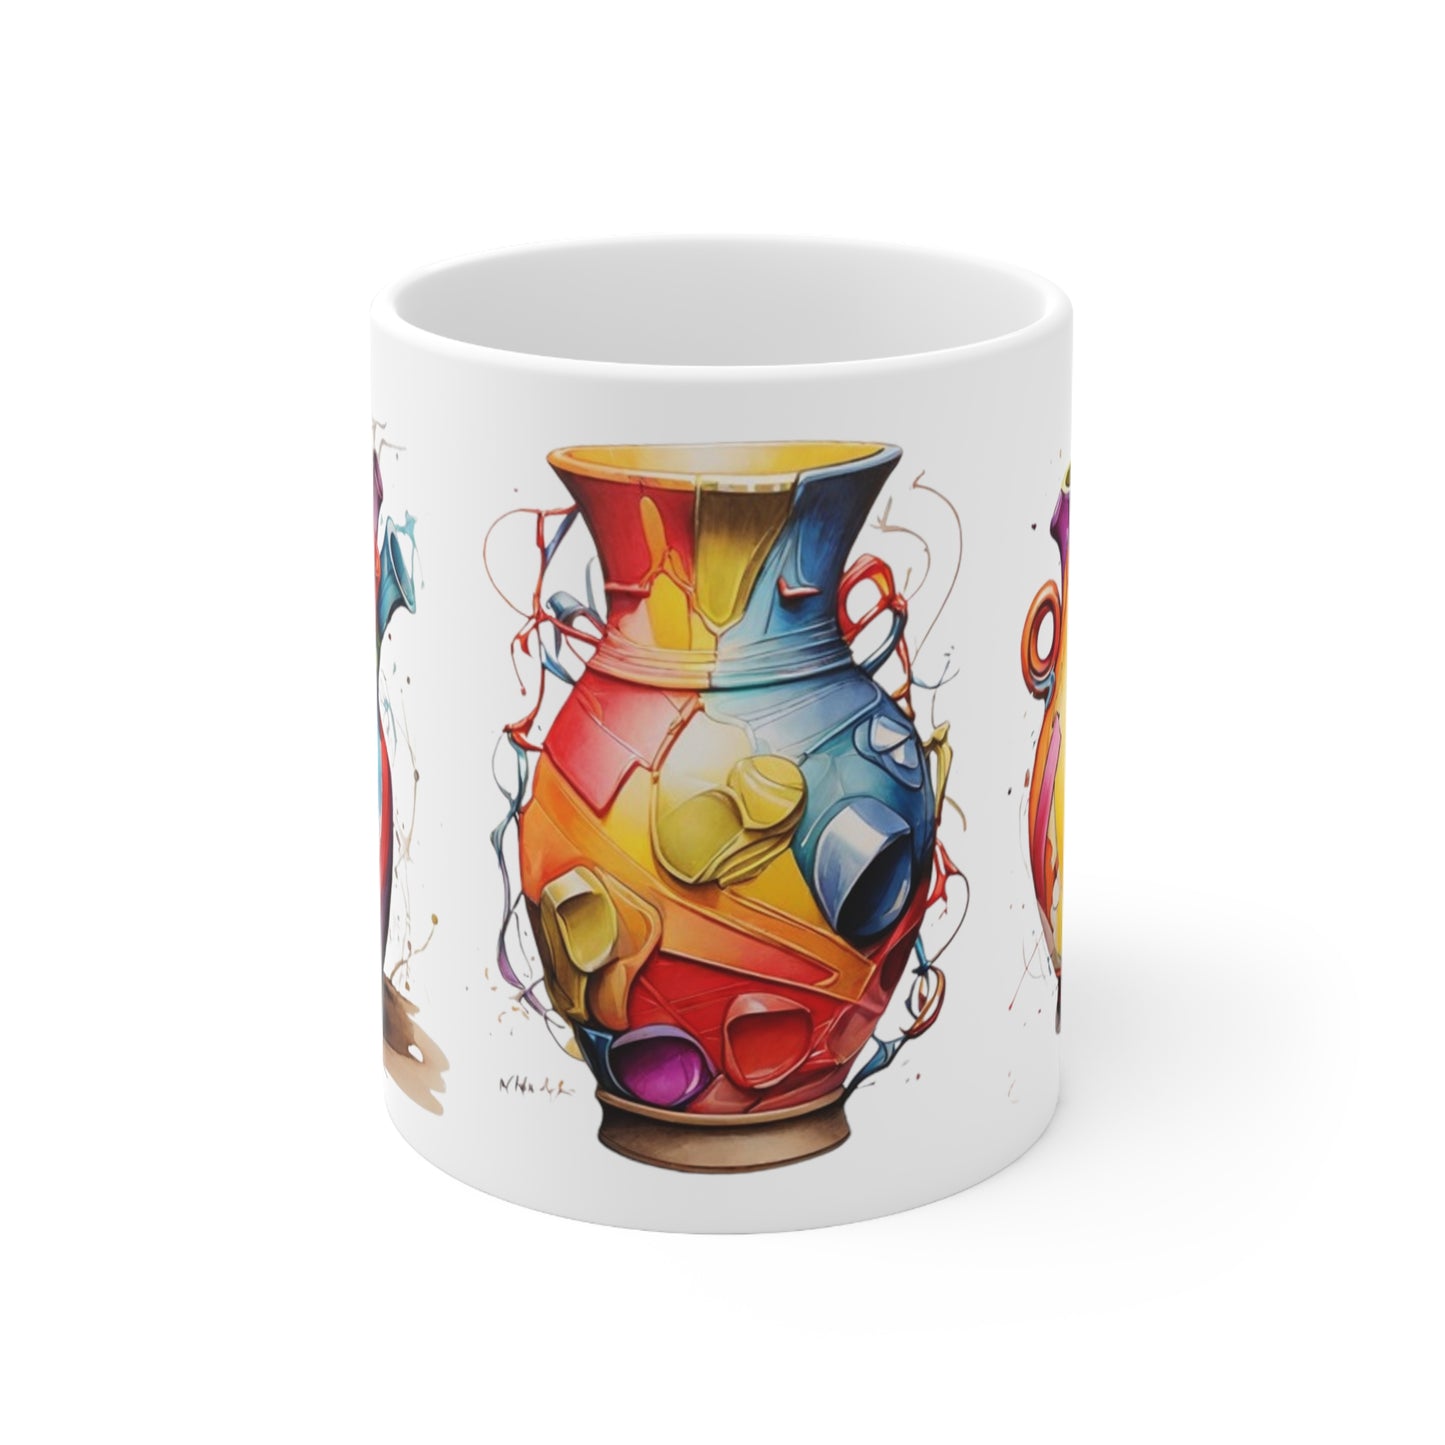 Colourful Messy Vase's Mug - Ceramic Coffee Mug 11oz